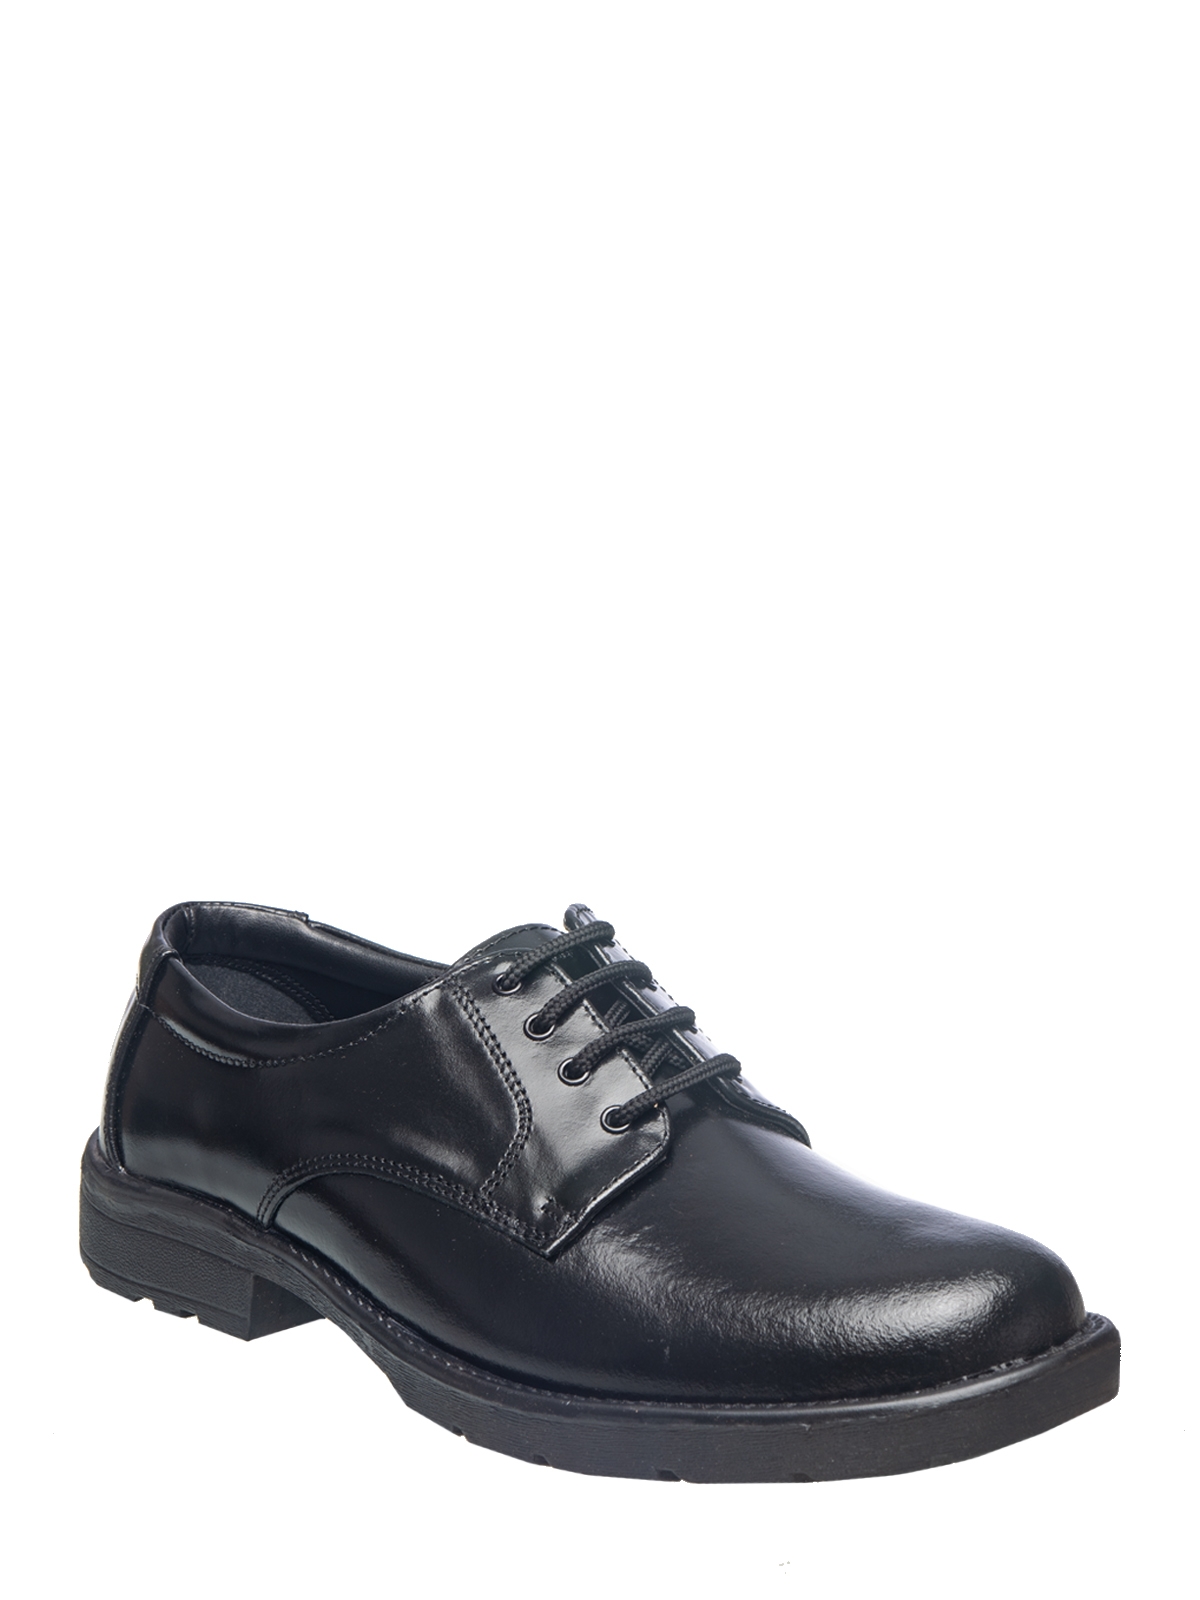 Khadim | Khadim's Leather Black Formal Derby Shoe For Boy